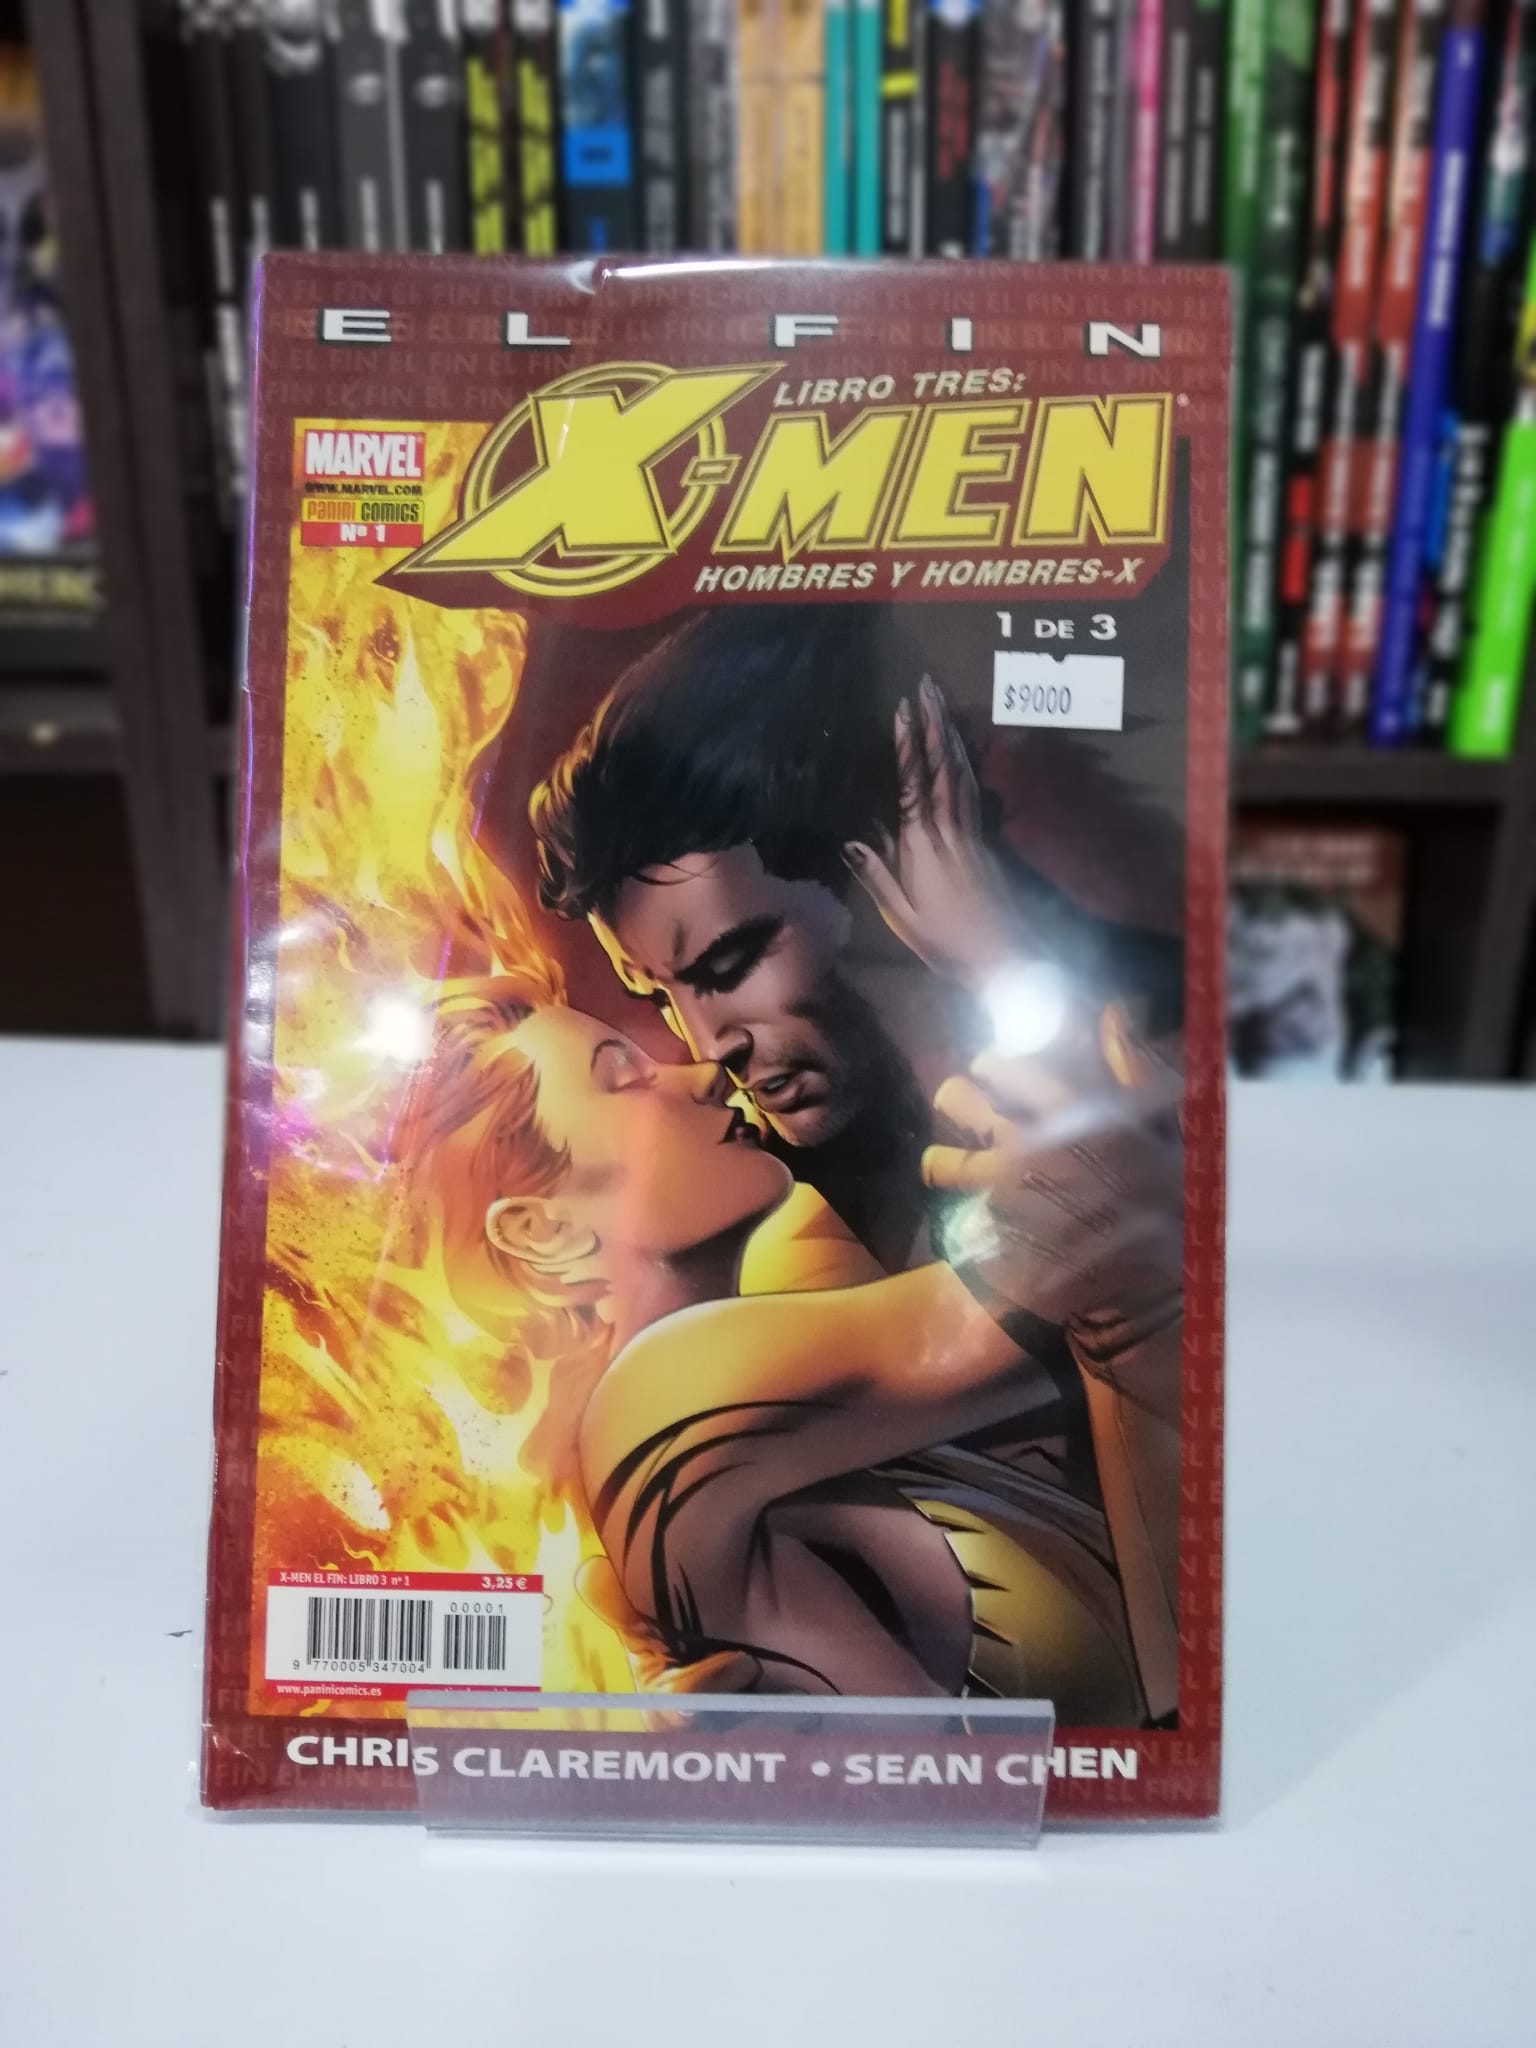 X-Men: El fin - Libro Tres: Hombres y Hombres-x (2007) Historia Completa Grapas Panini España ENcuadrocomics